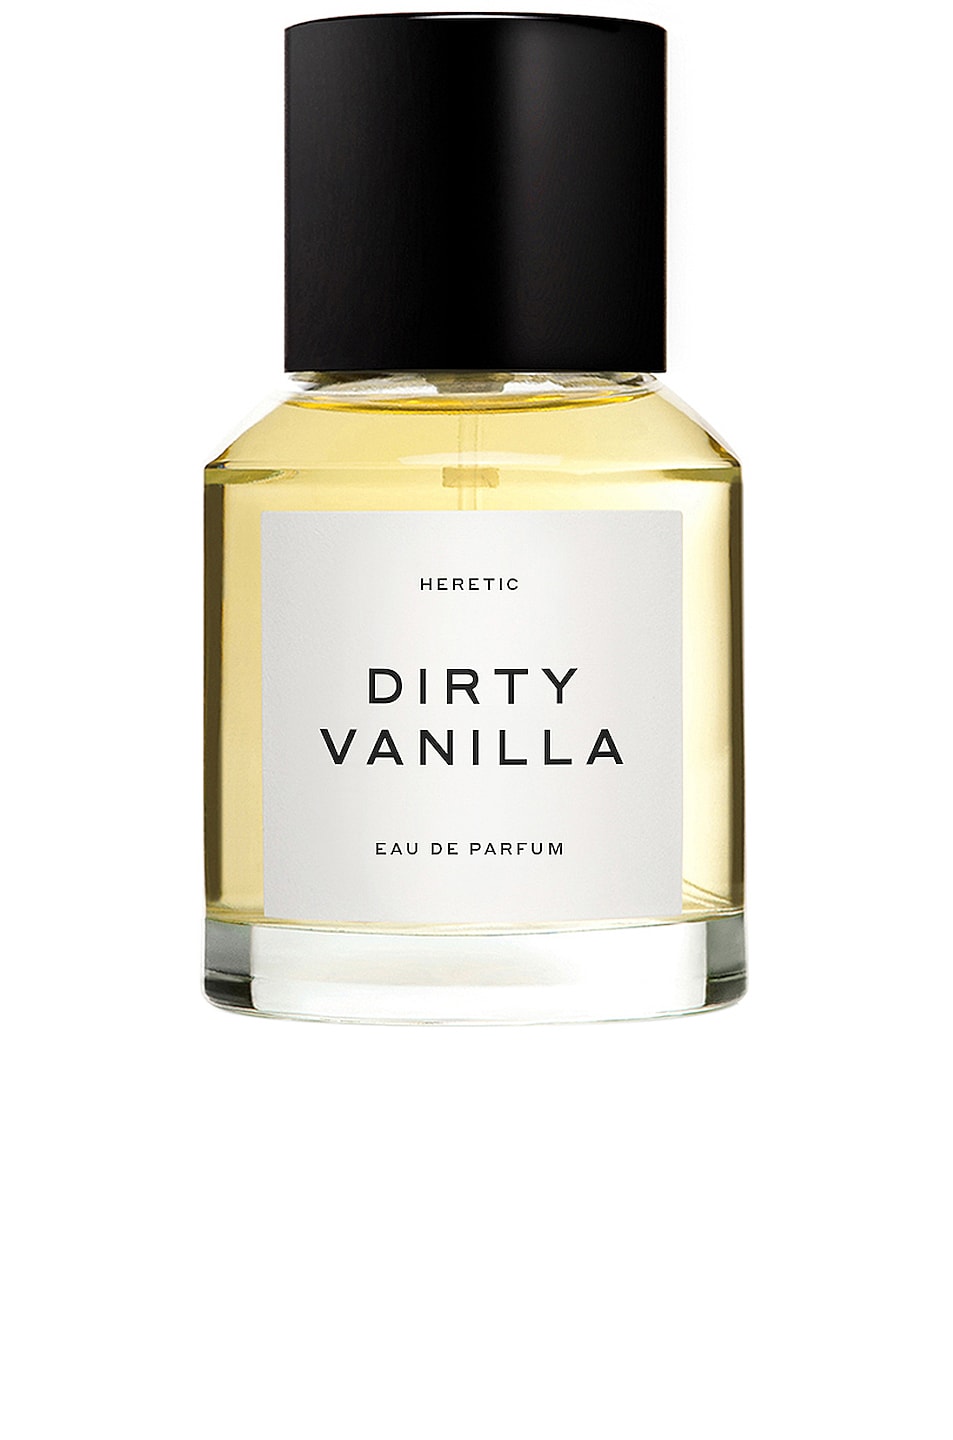 Dirty Vanilla Eau de Parfum in Beauty: NA